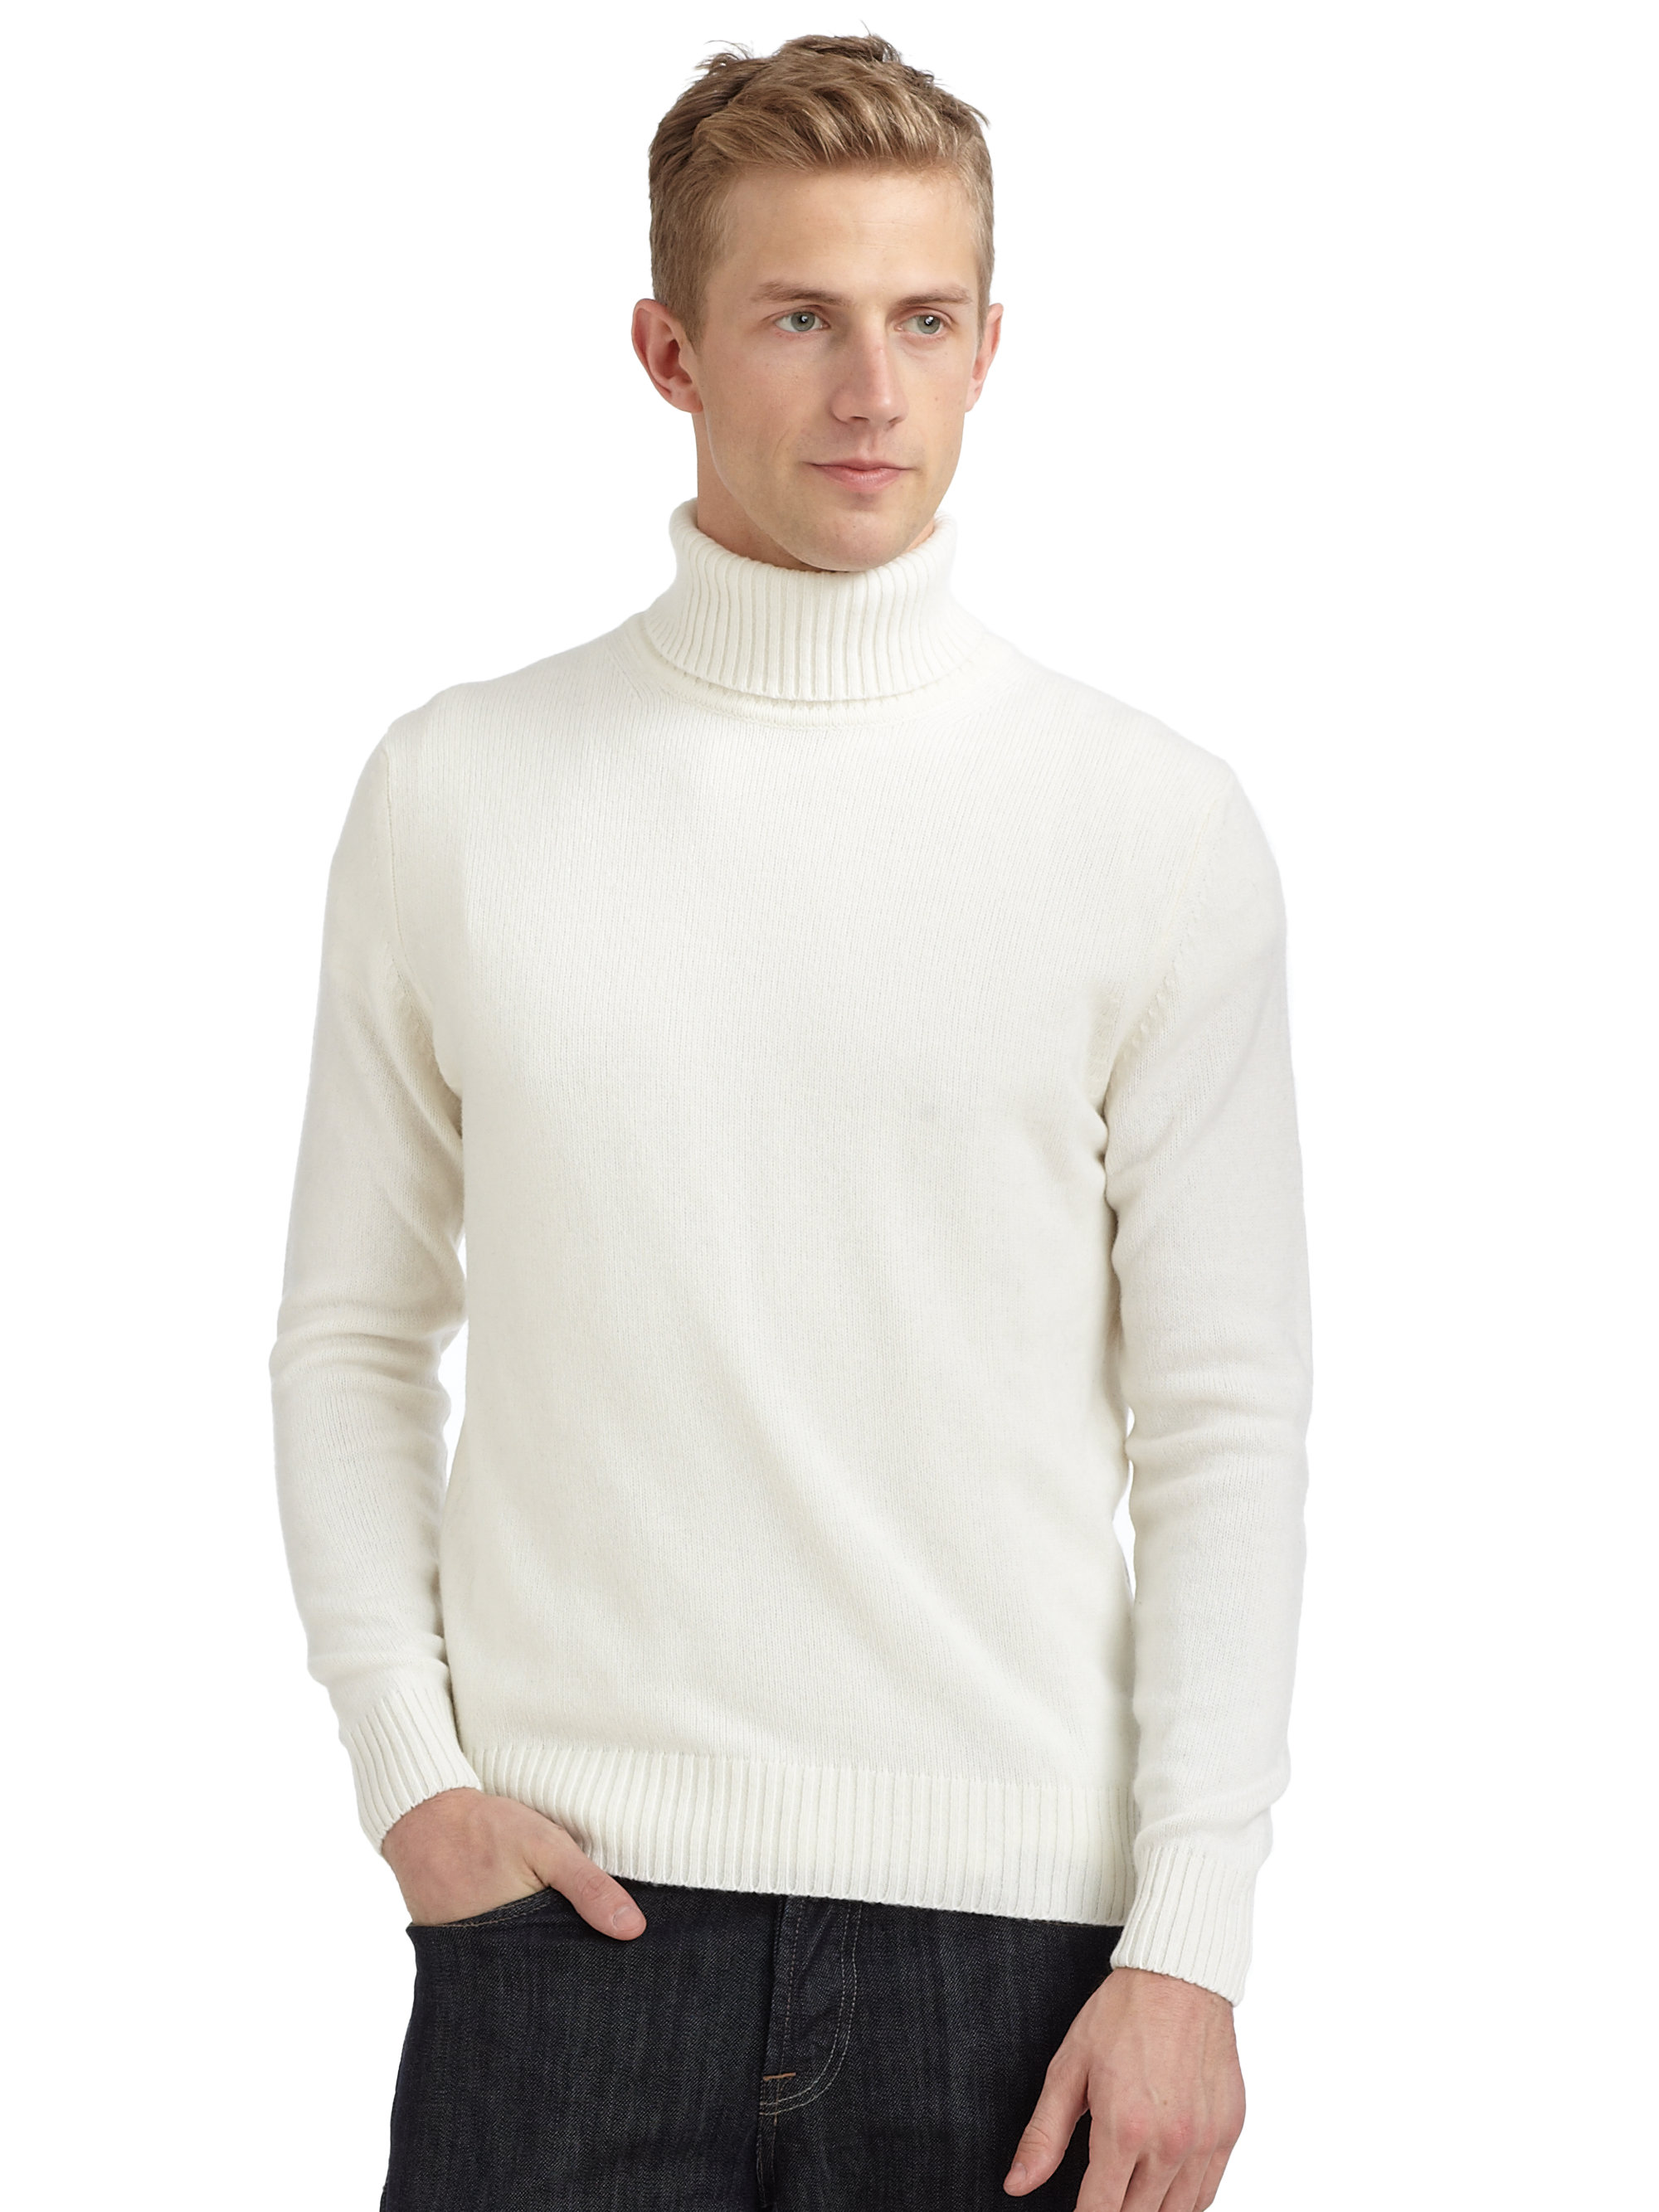 Calvin Klein Turtleneck Sweater in White for Men - Lyst